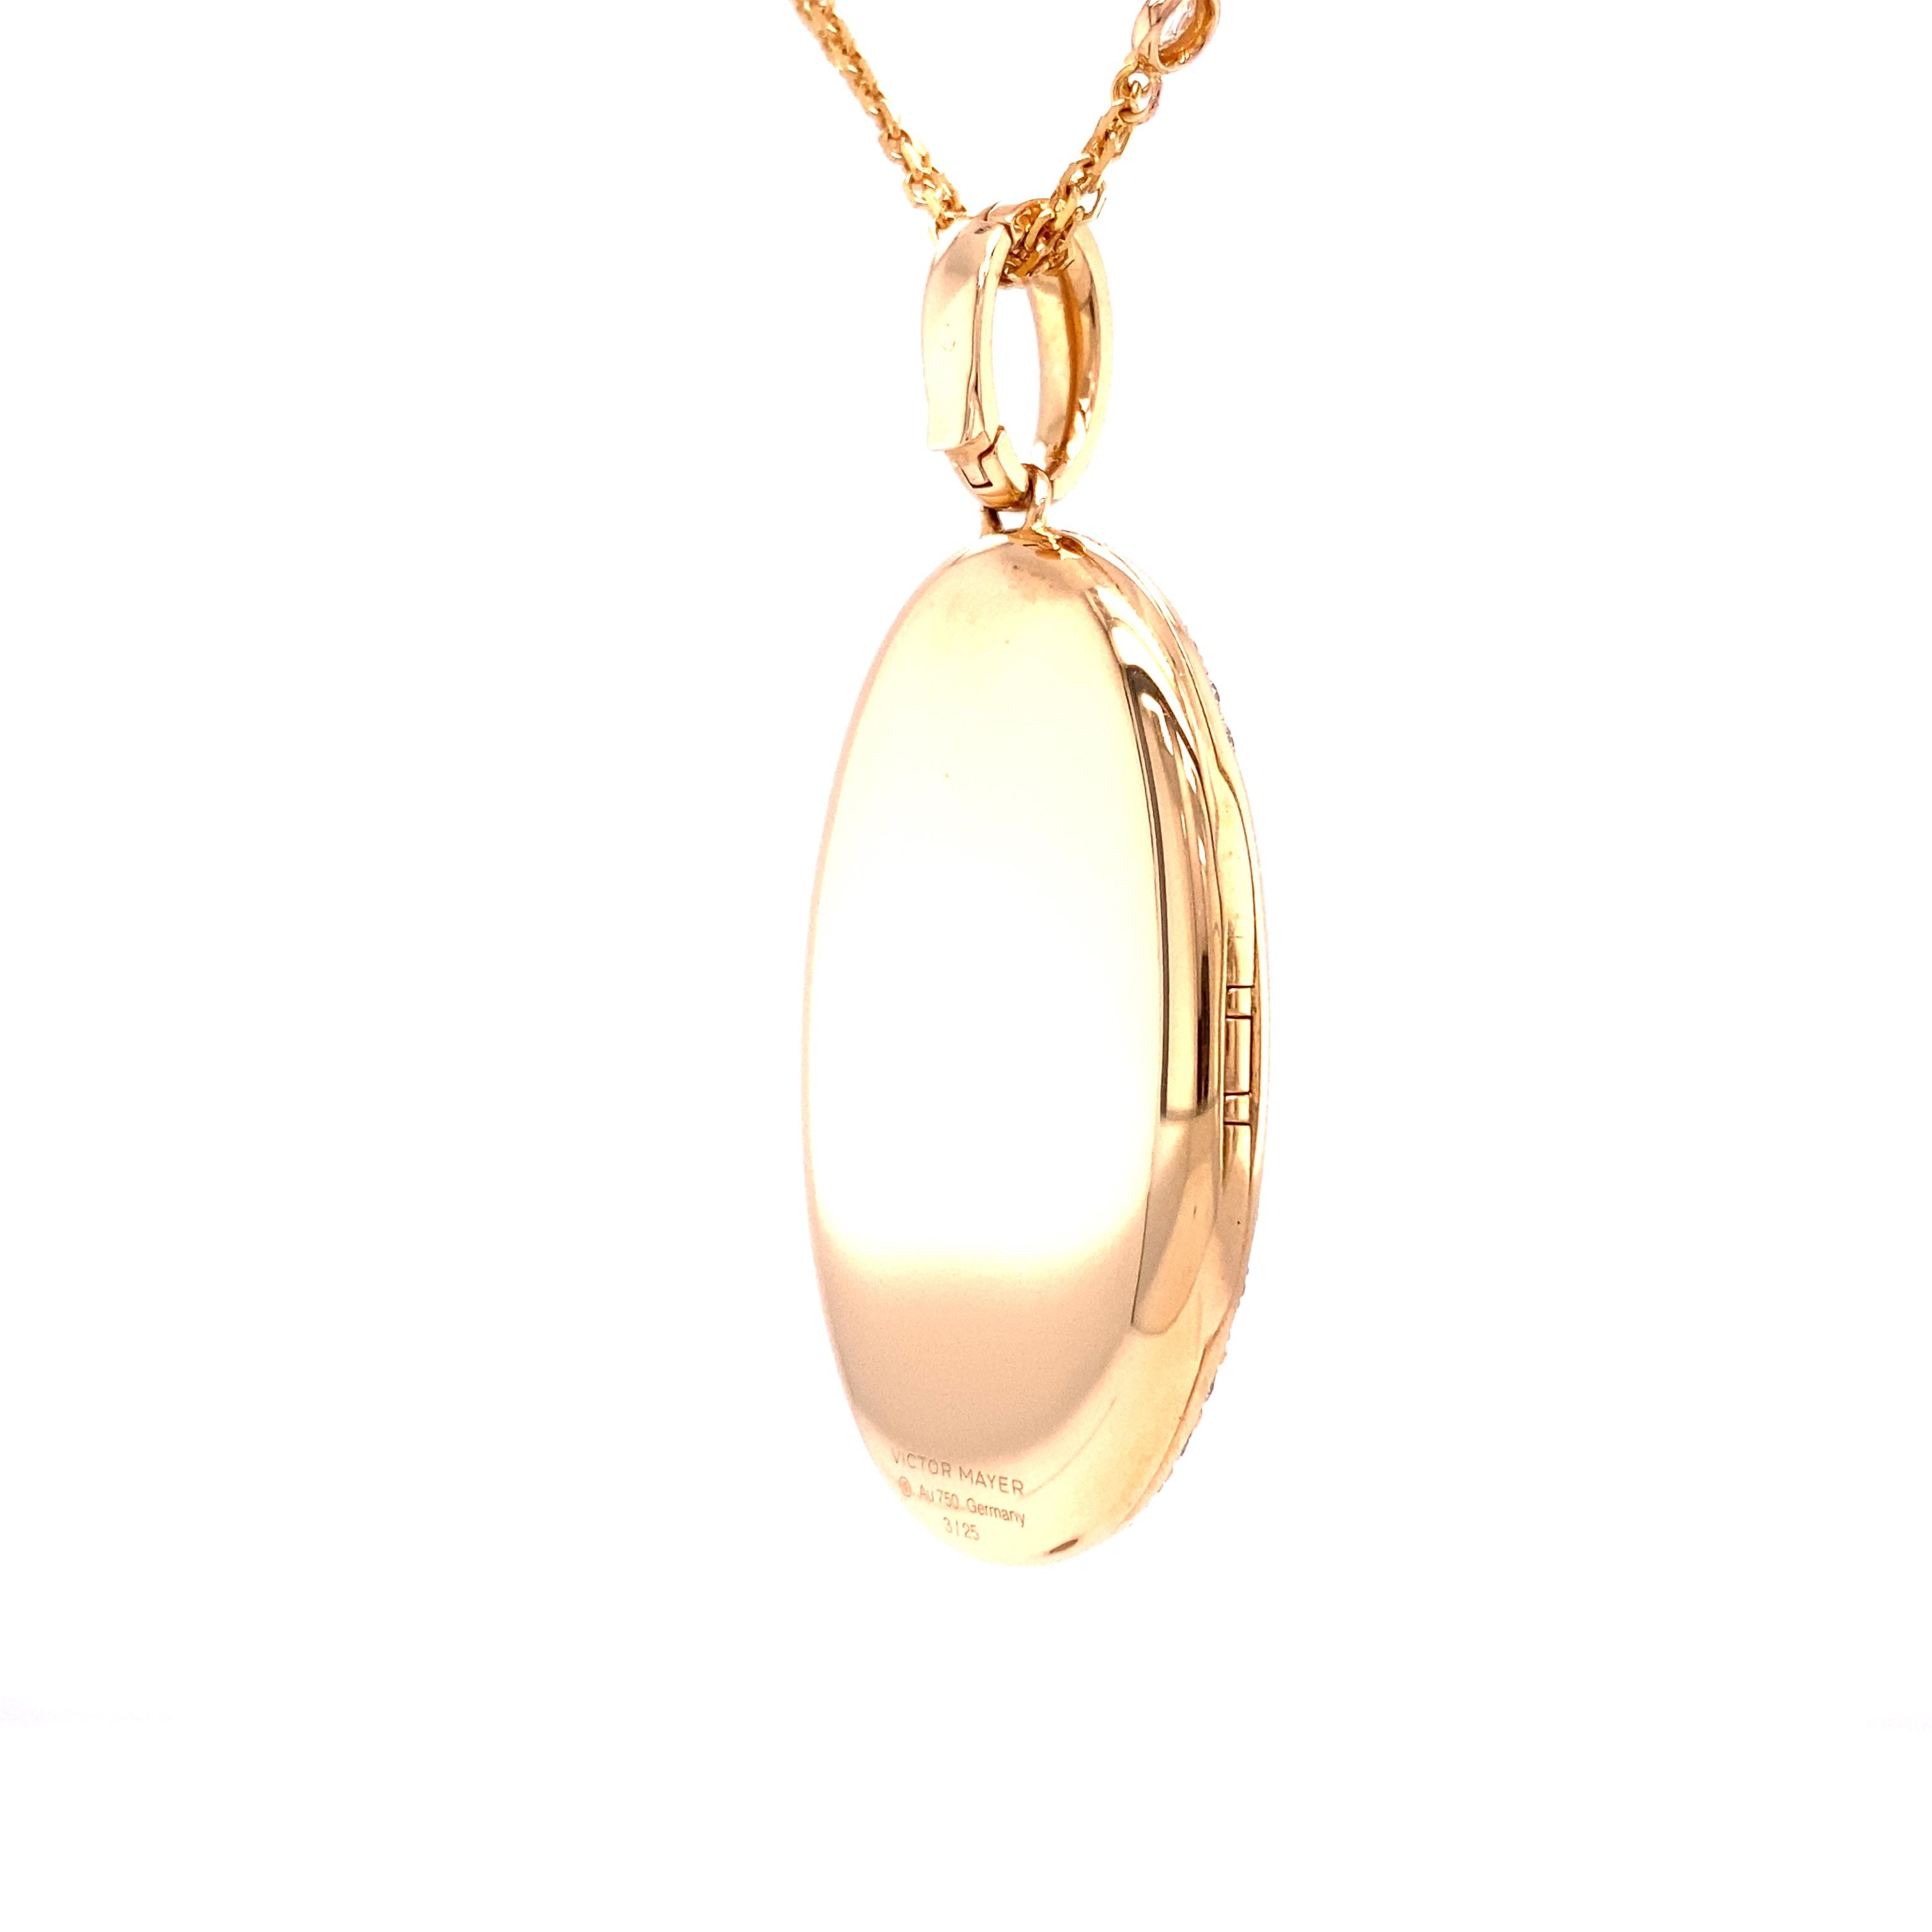 Contemporary Customizable Oval Locket Pendant Necklace - 18k Rose Gold - 151 Diamonds 4.18 ct For Sale